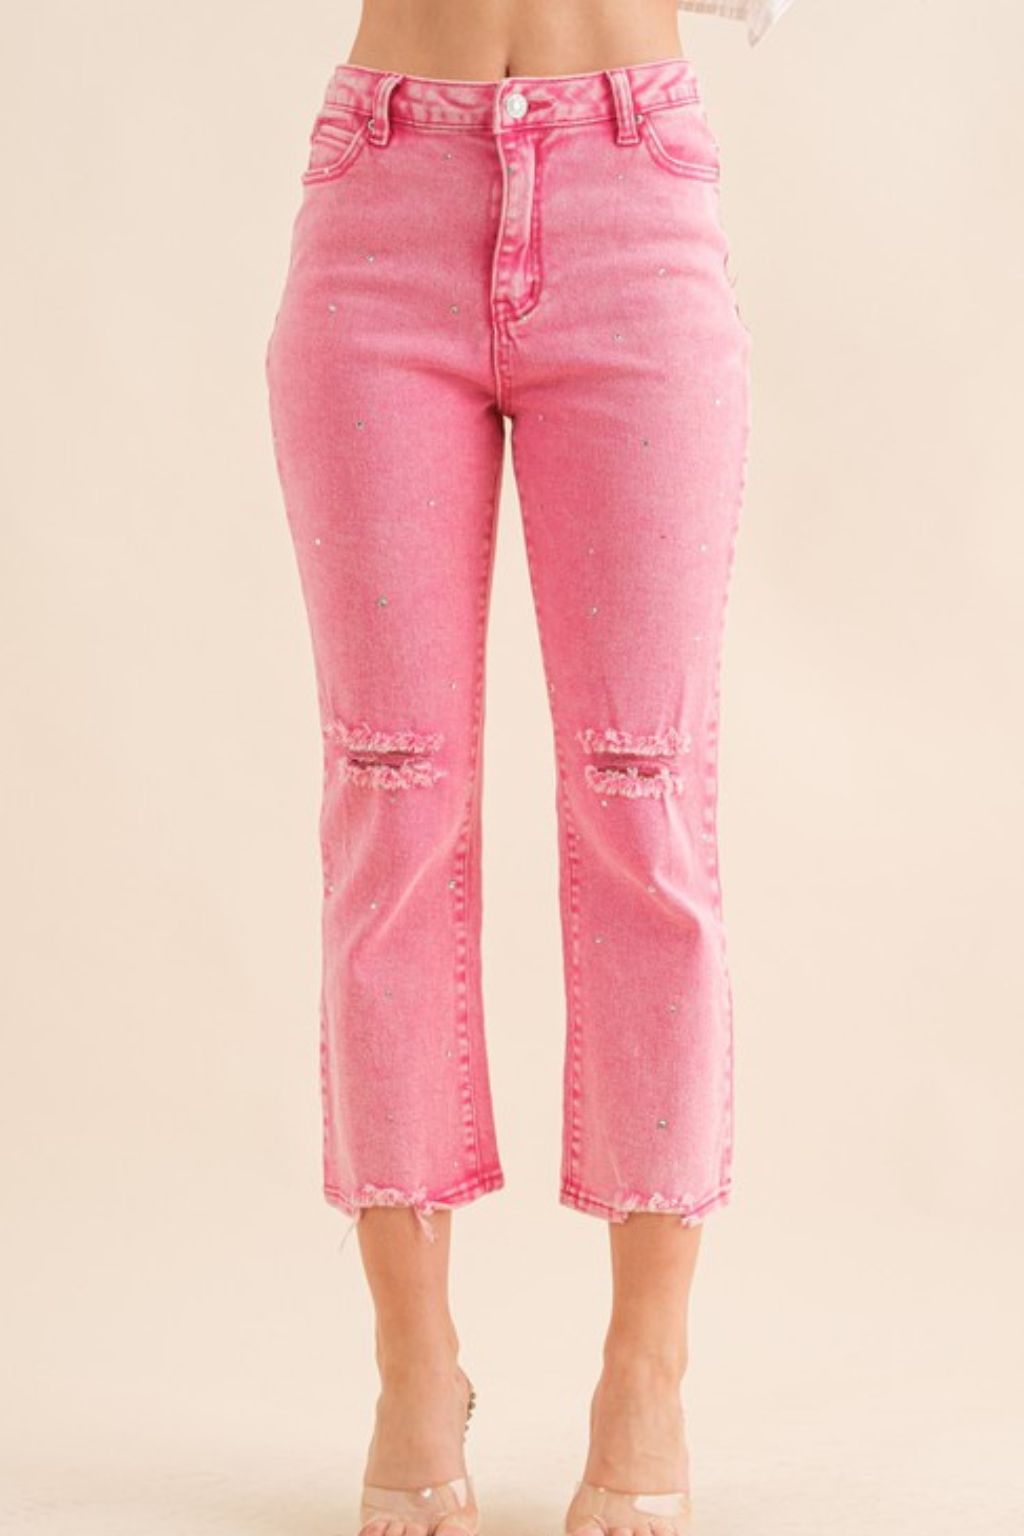 Studded Rhinestone Distressed Denim Jeans